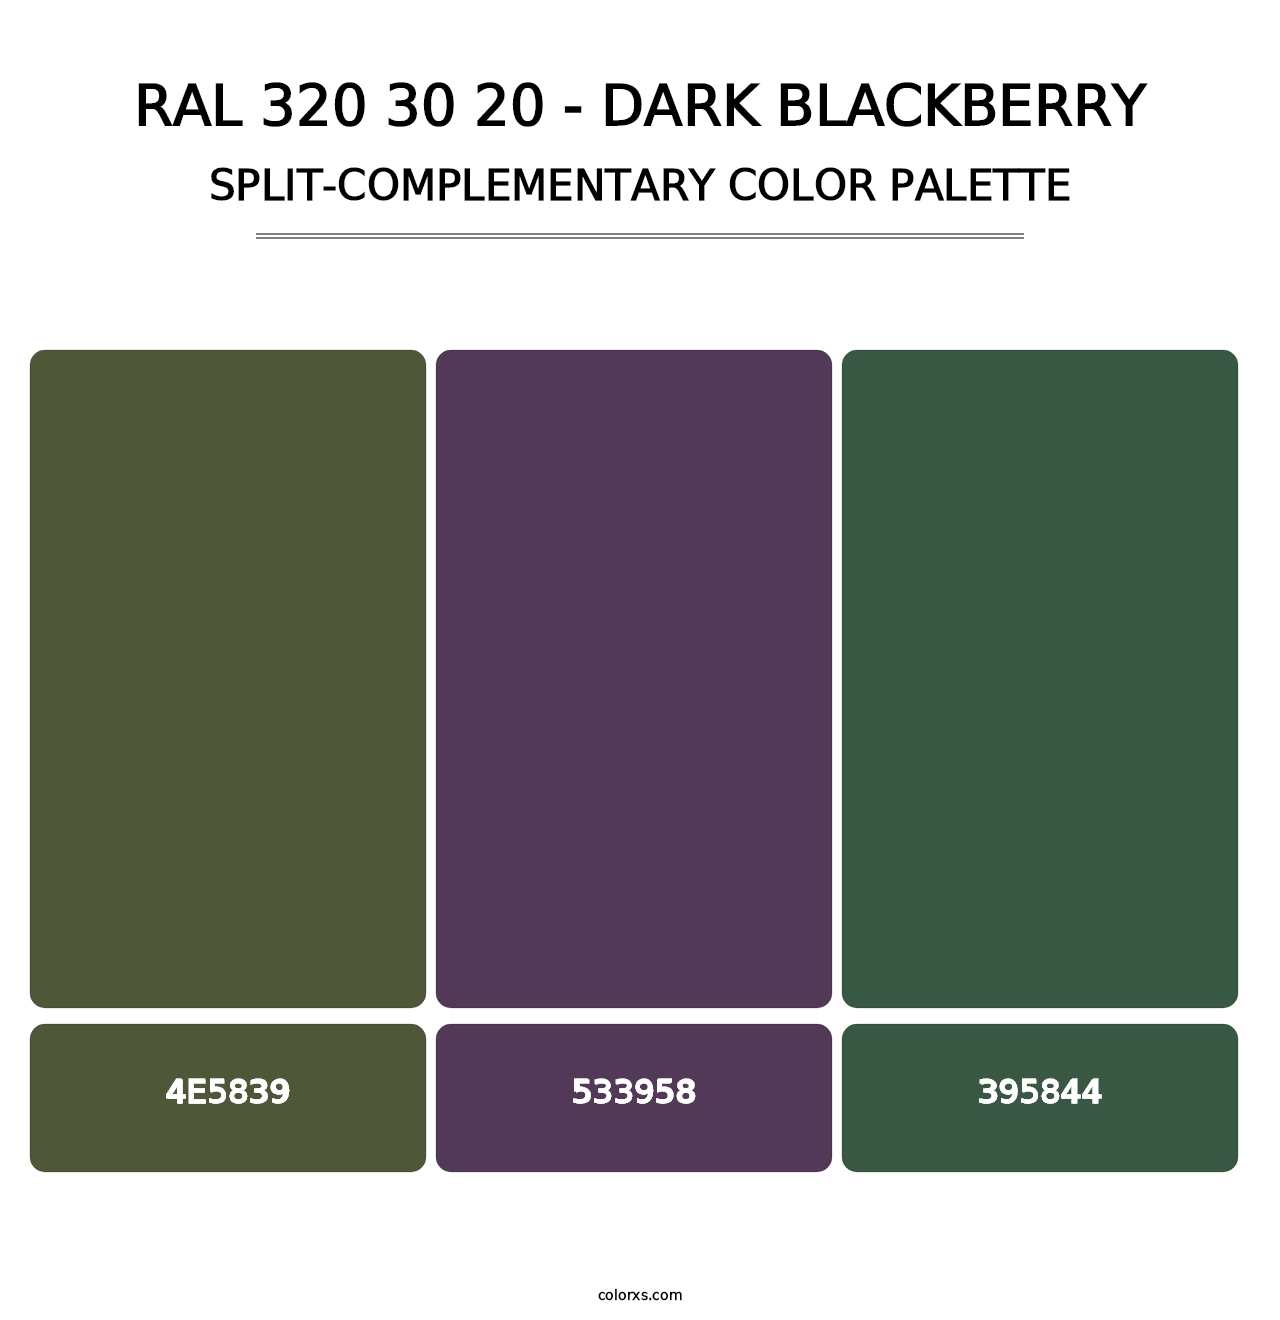 RAL 320 30 20 - Dark Blackberry - Split-Complementary Color Palette